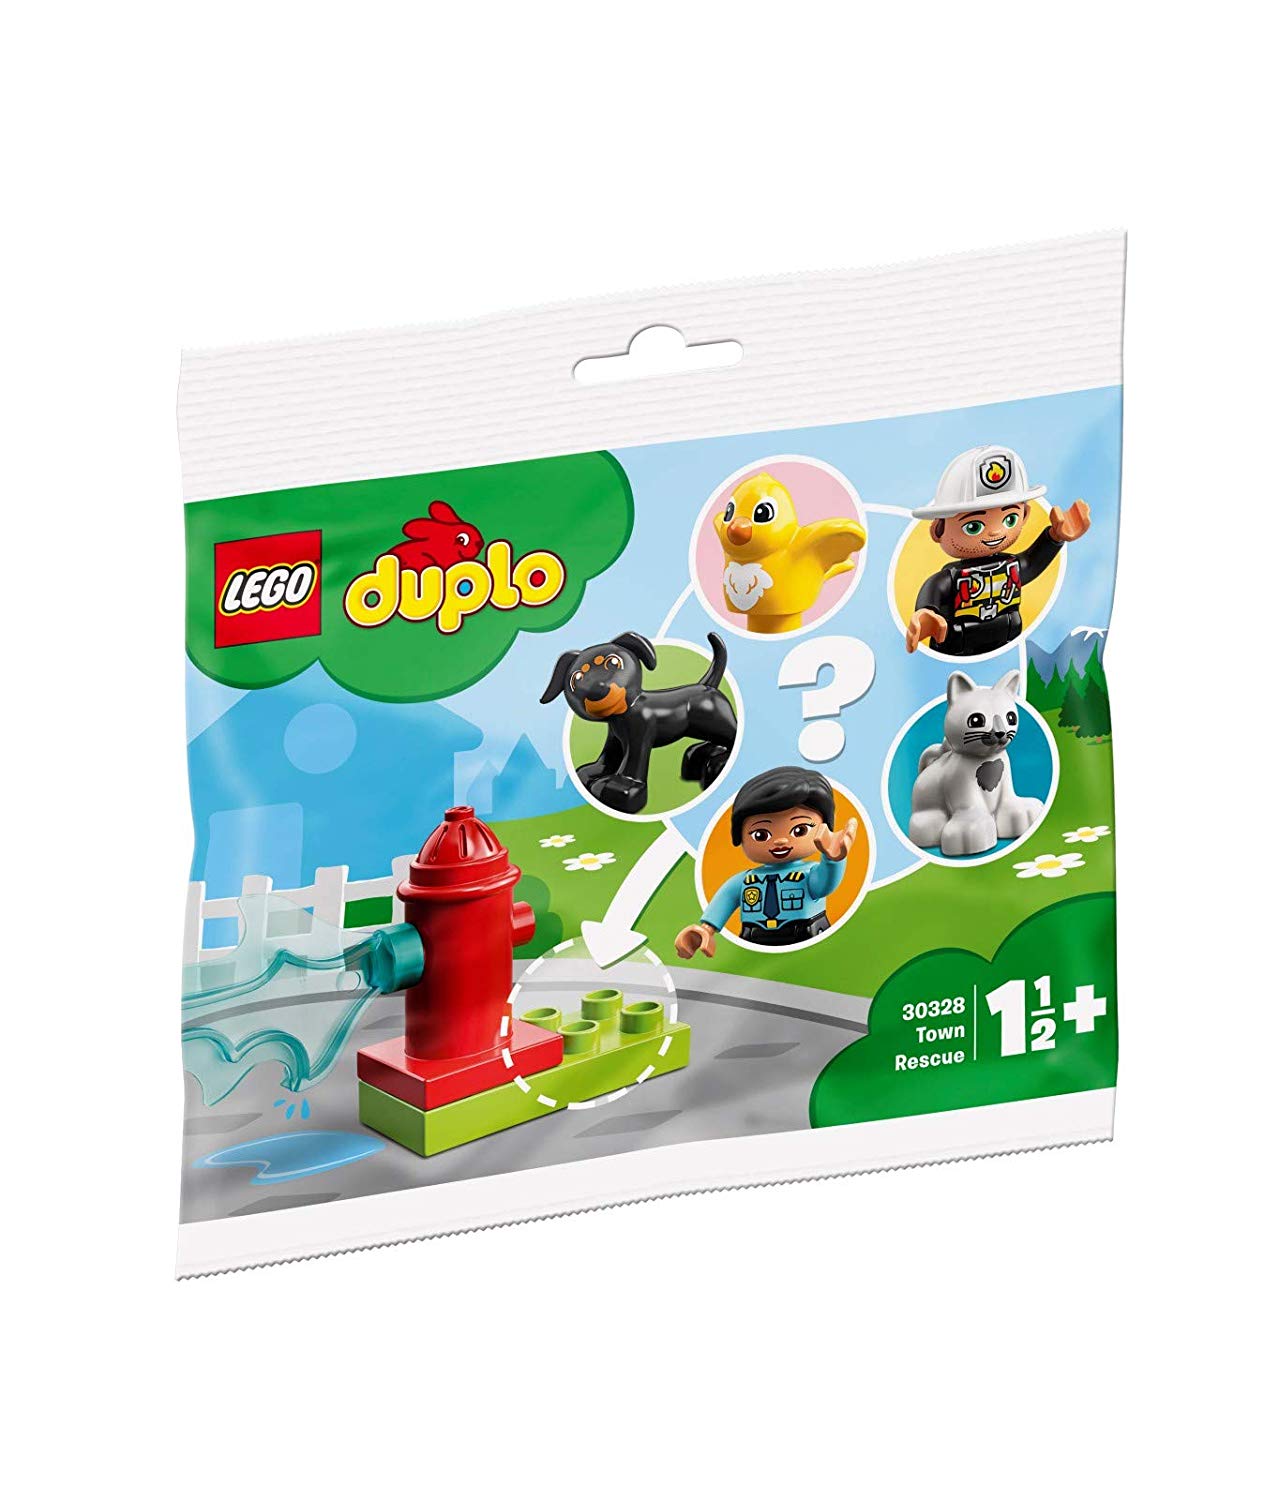 Speelgoed - Brandweer Redding Lego Duplo (30328) (1 Toys)